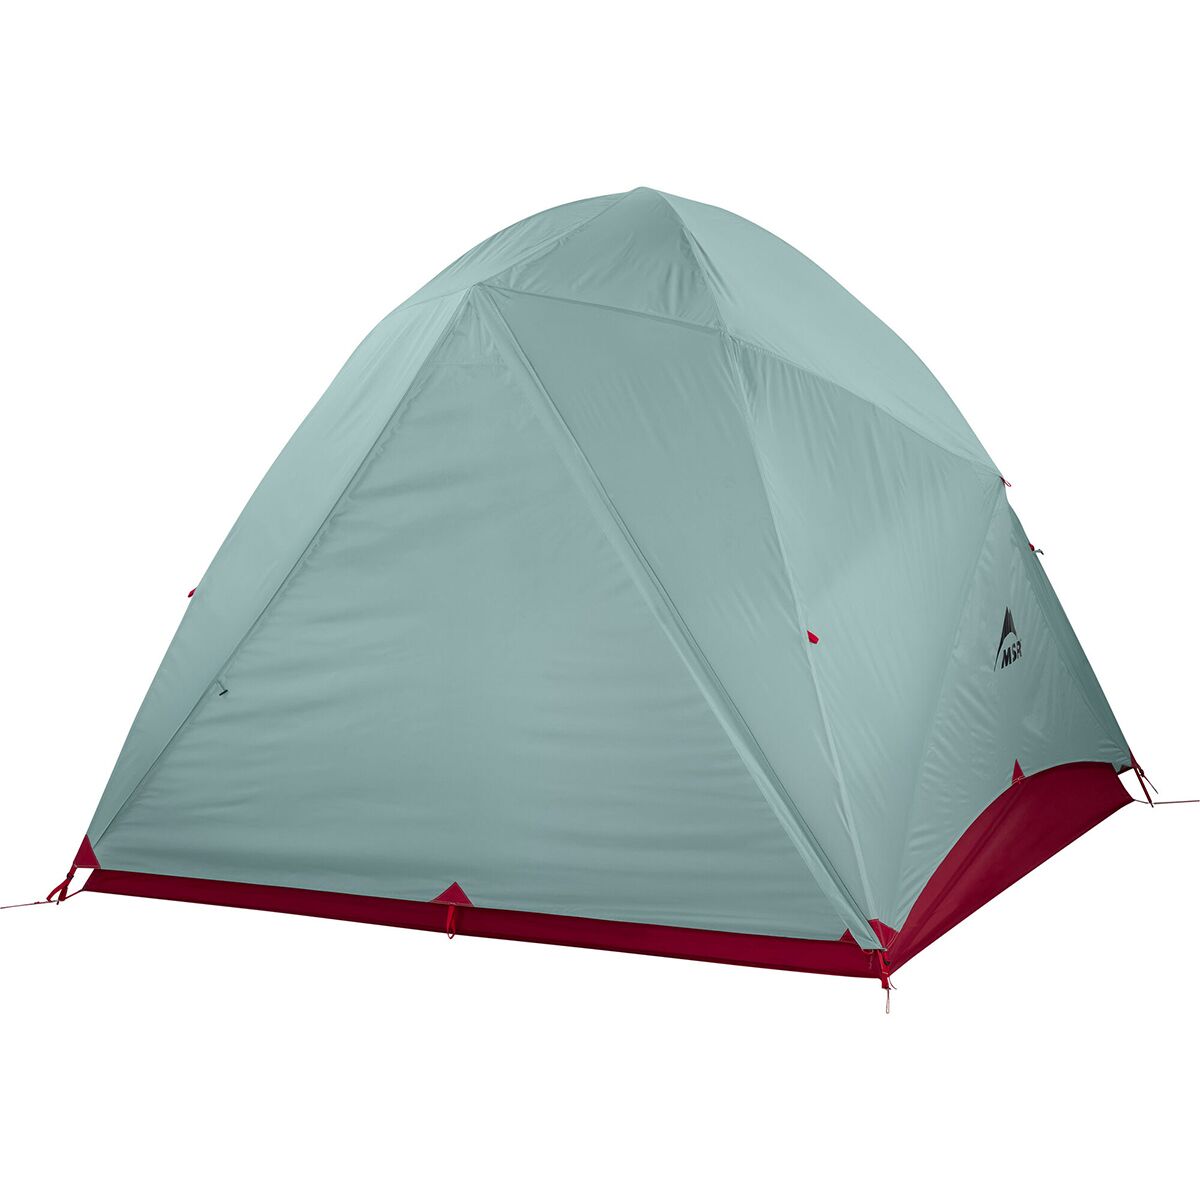 Habiscape 6 Tent